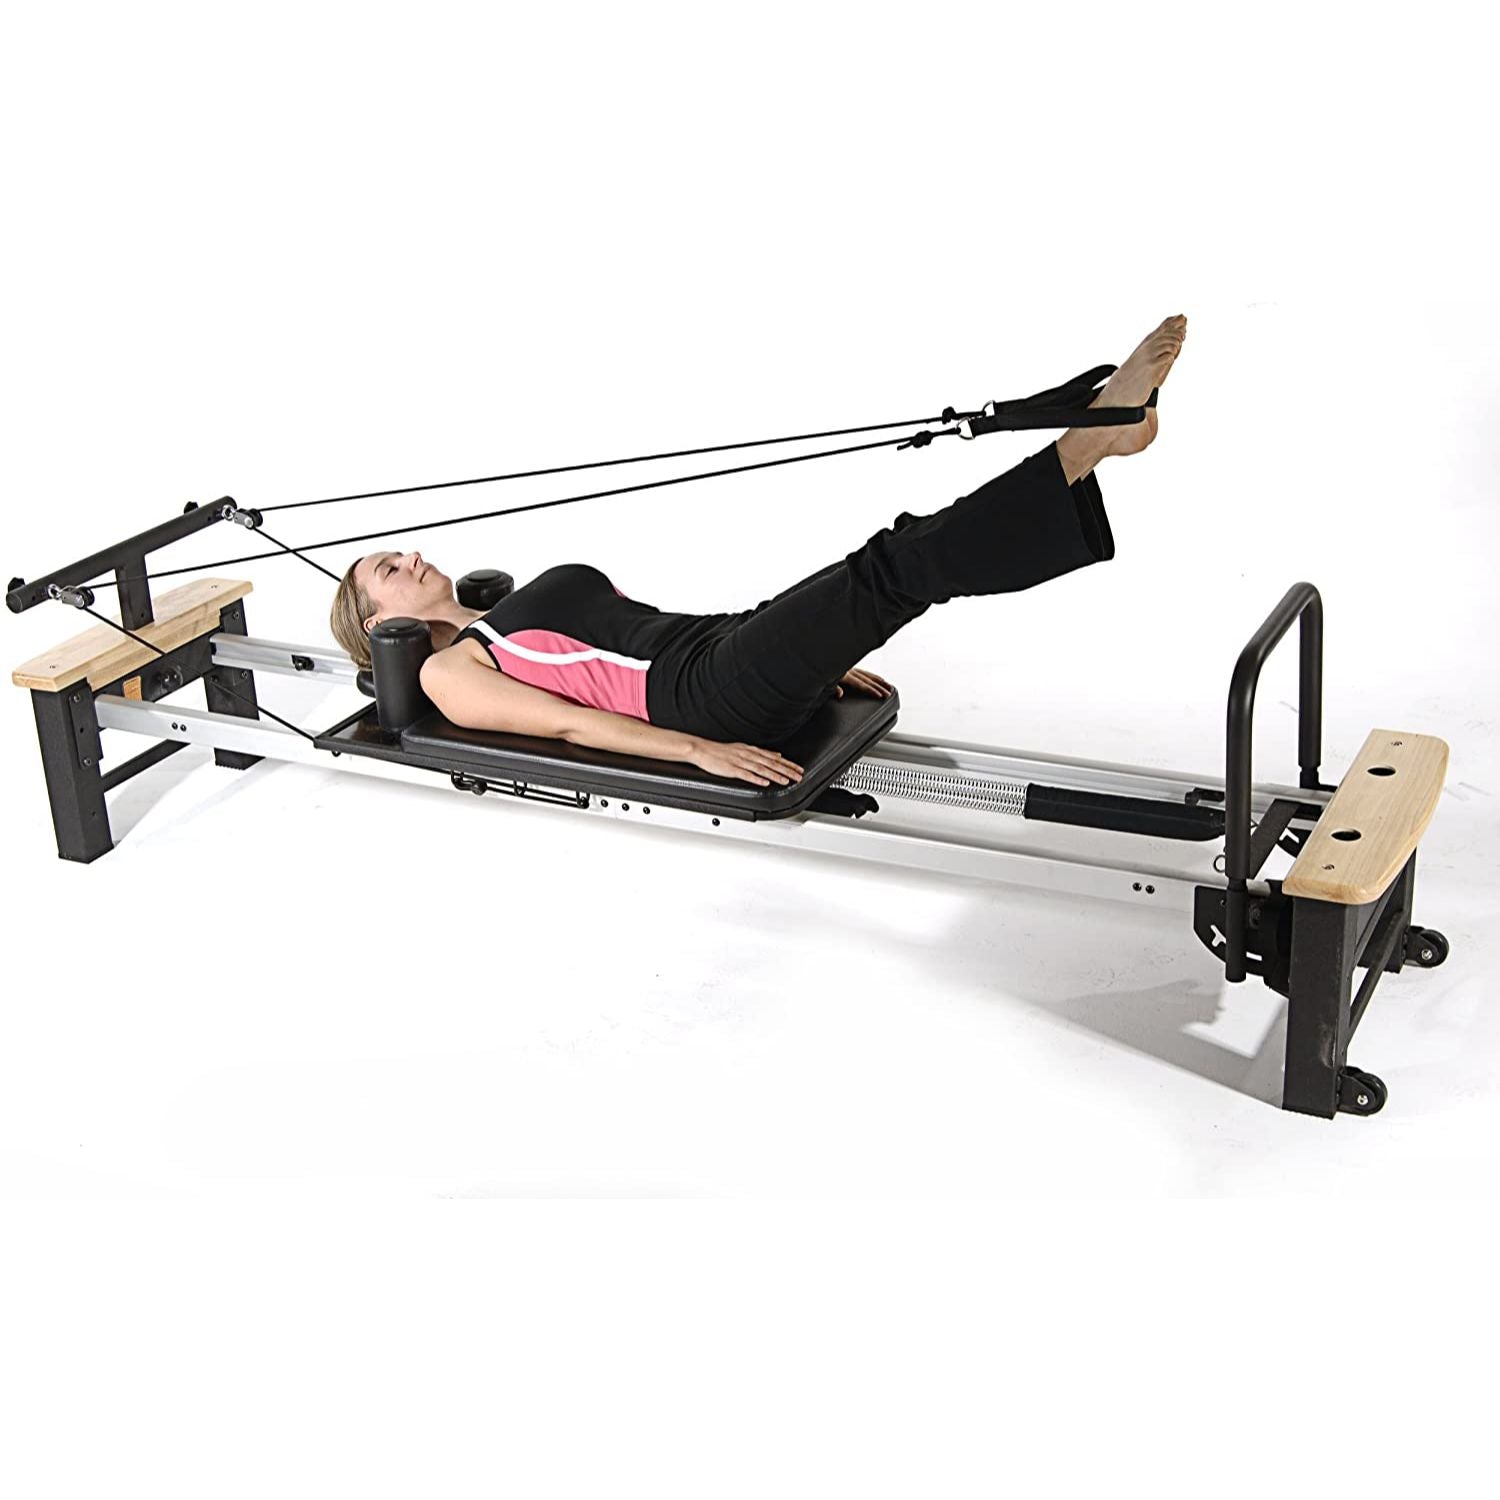 Stamina Aero Pilates Machine Model # 55-4296 - Health & Beauty Items - New  York, New York, Facebook Marketplace